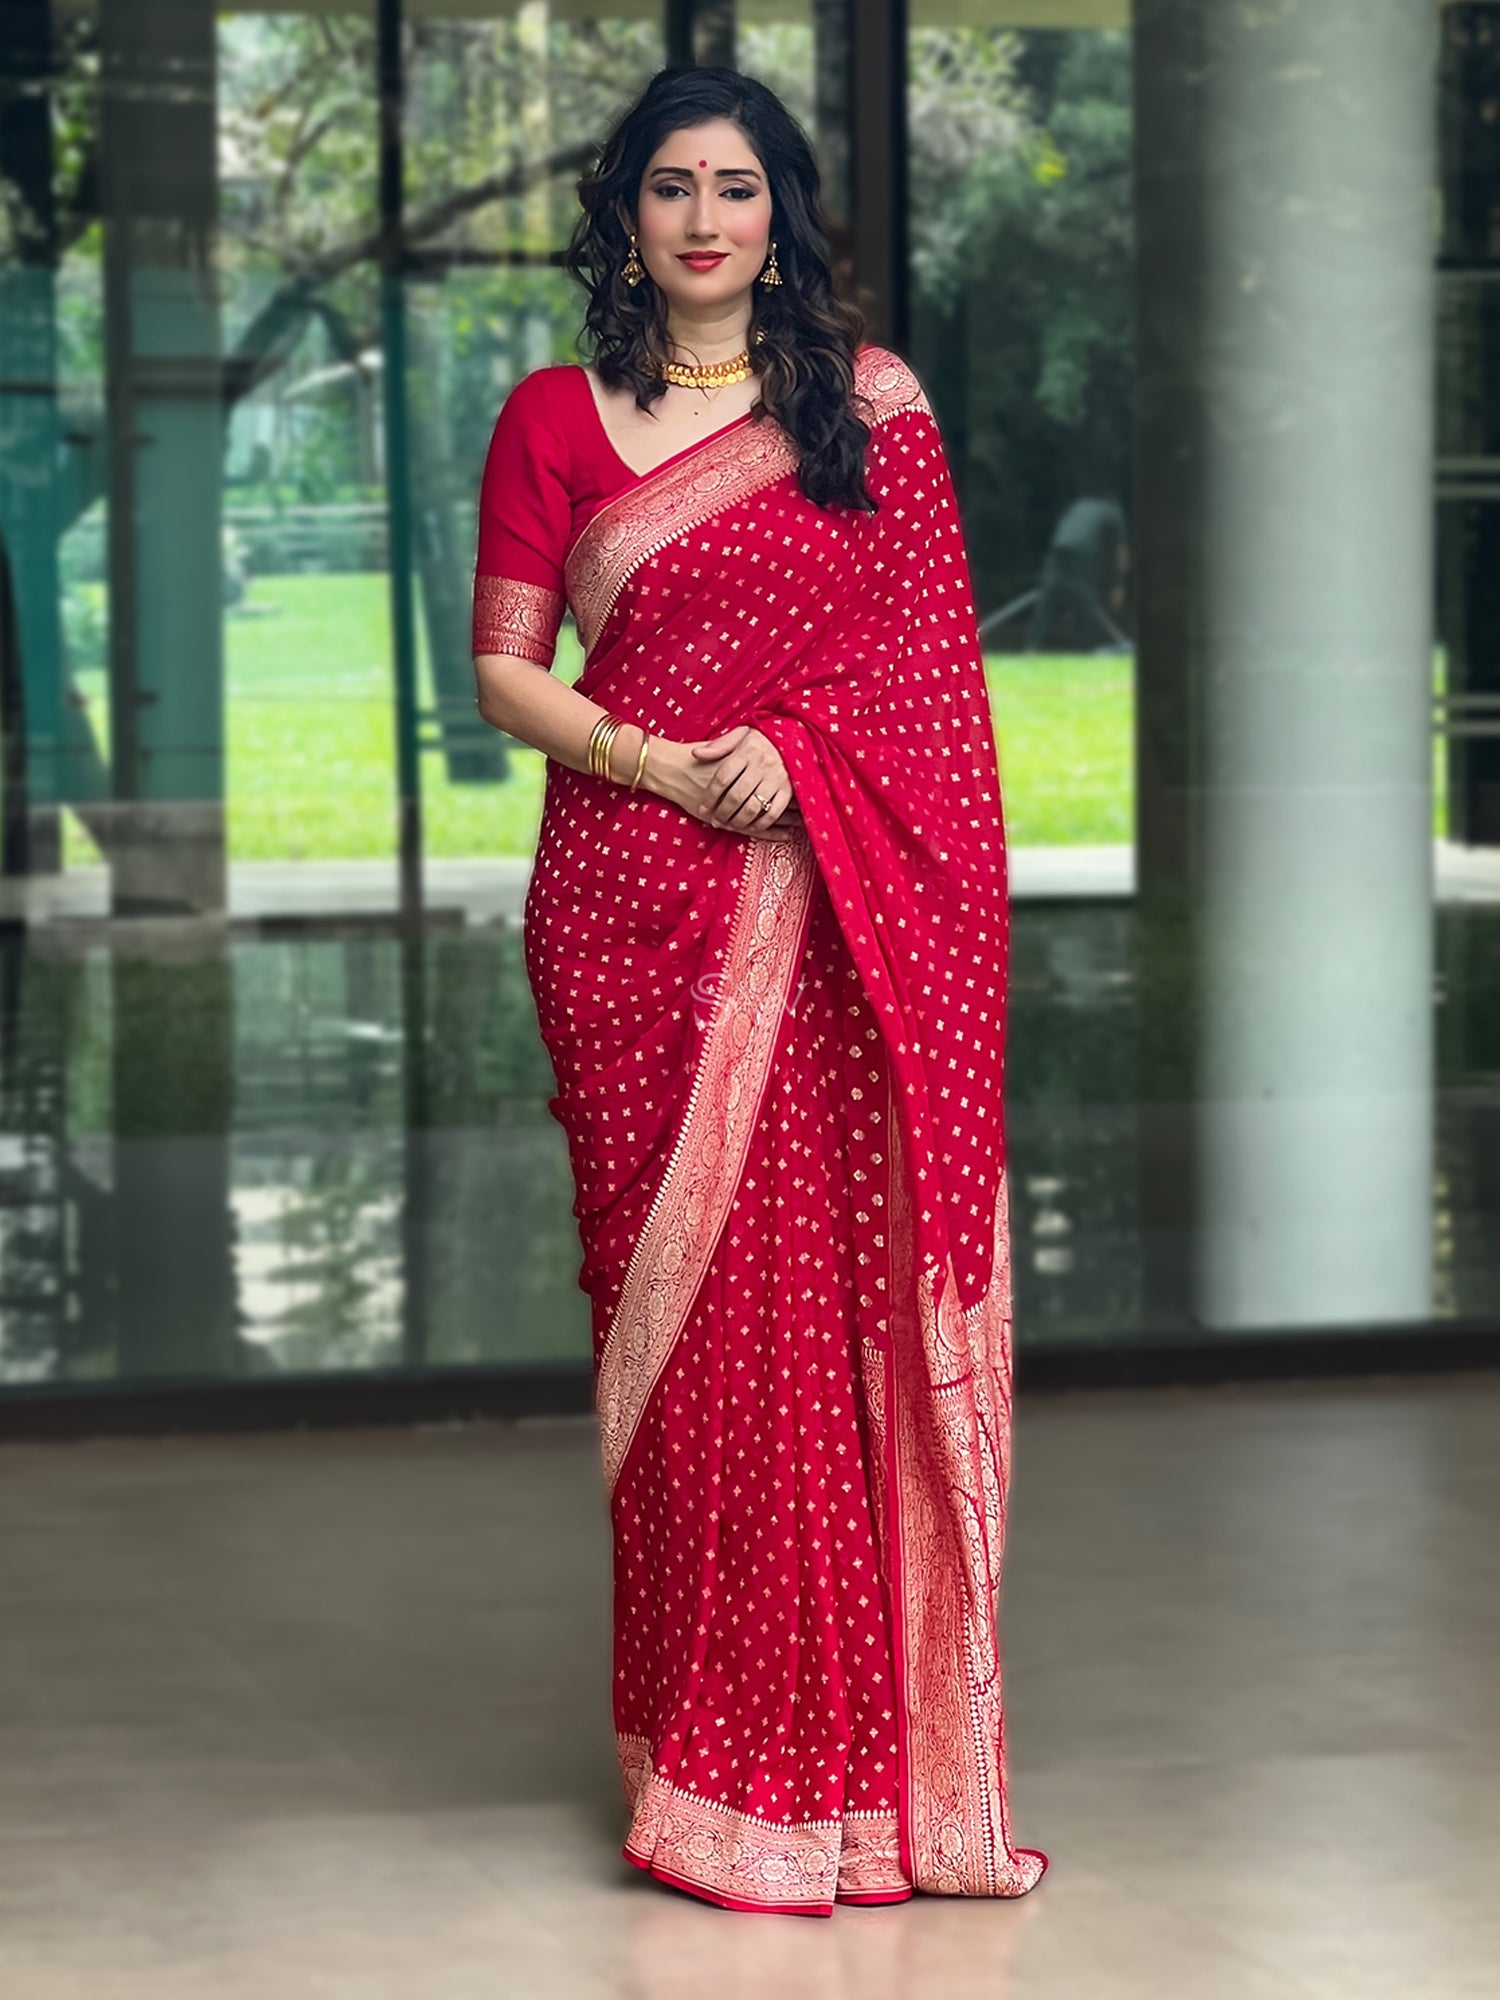 Banarasi sarees: Stylish sarees for wedding functions | - Times of India